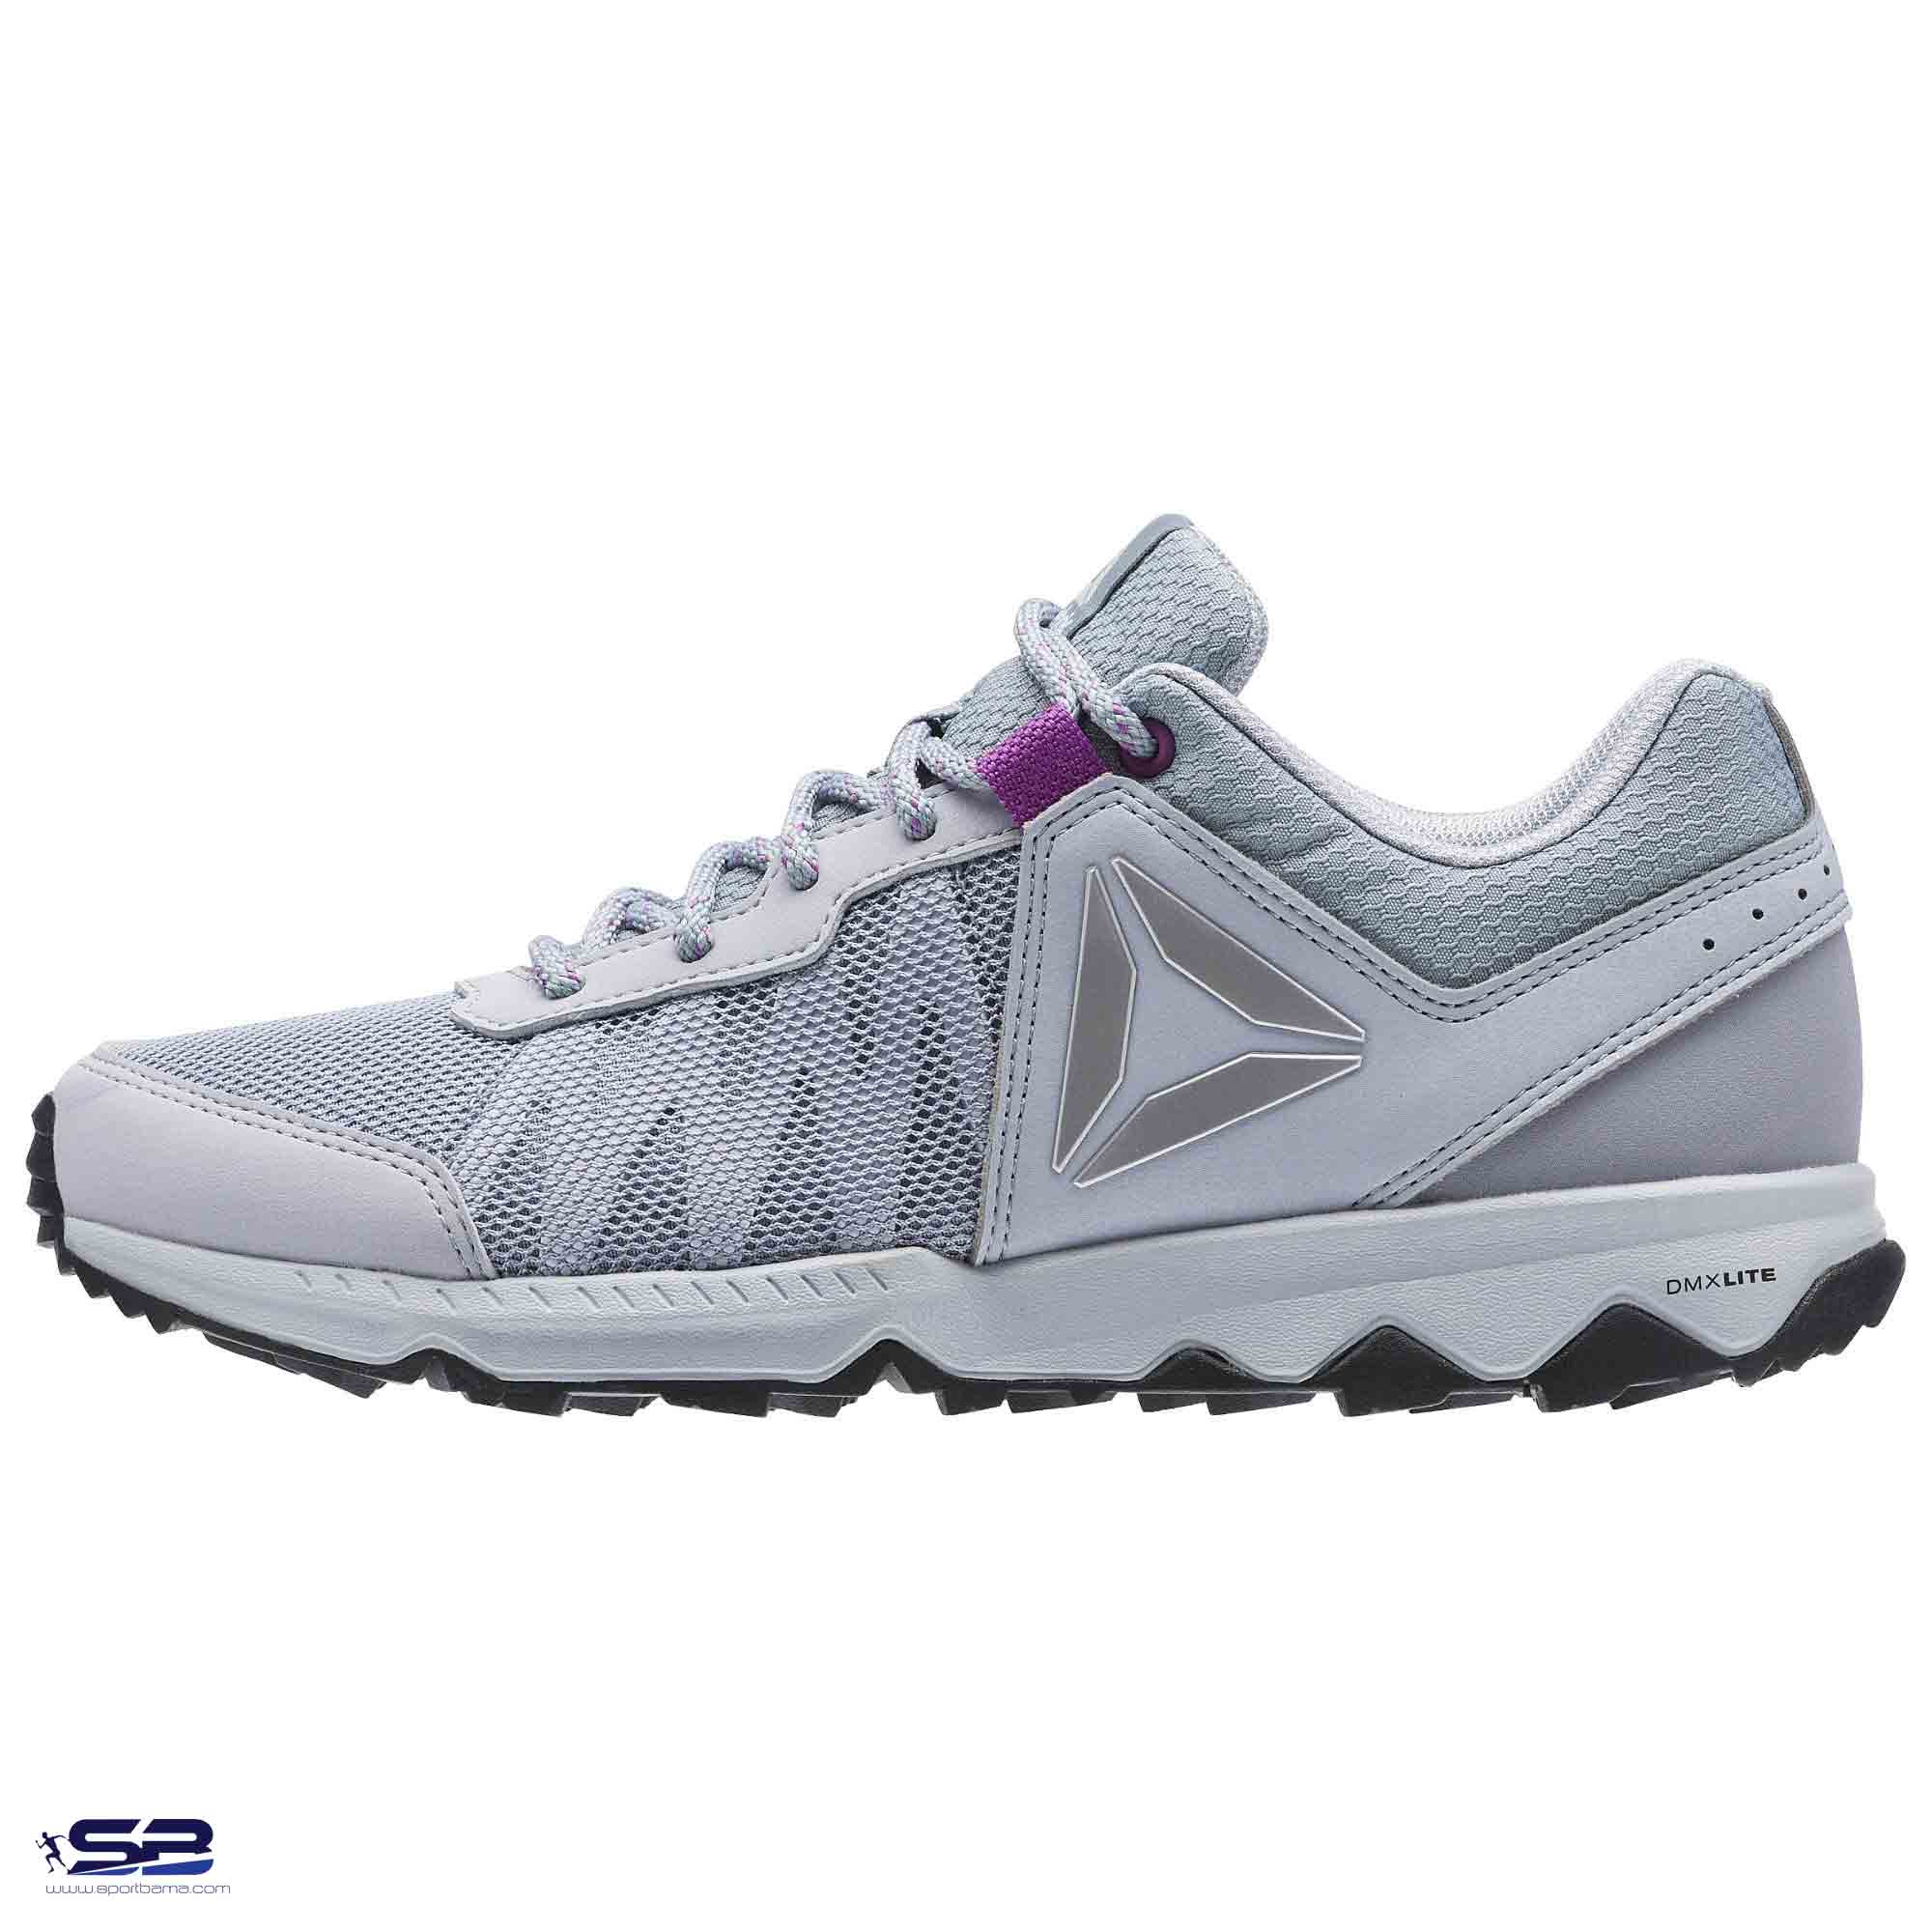  خرید  کفش کتانی اورجینال ریباک     Reebok Running Shoes BS5362  